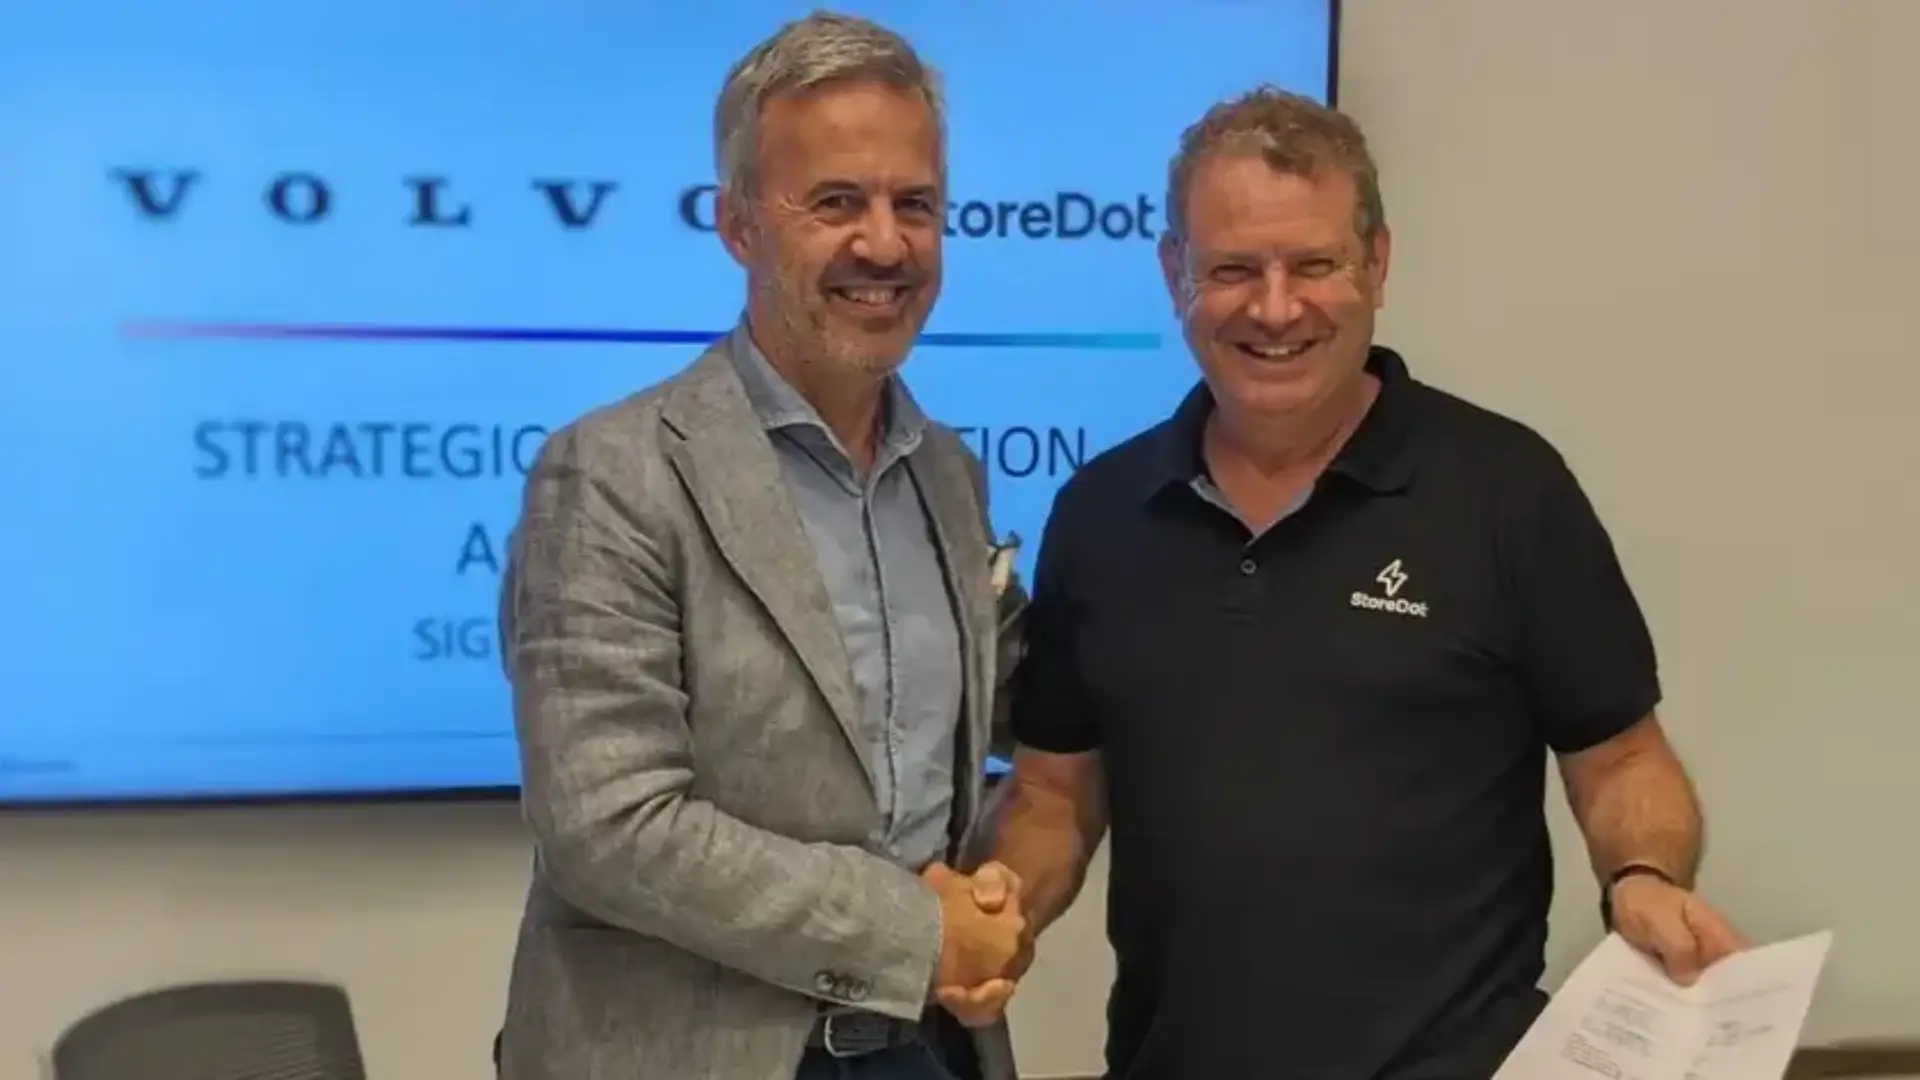 Volvo Store Dot agreement